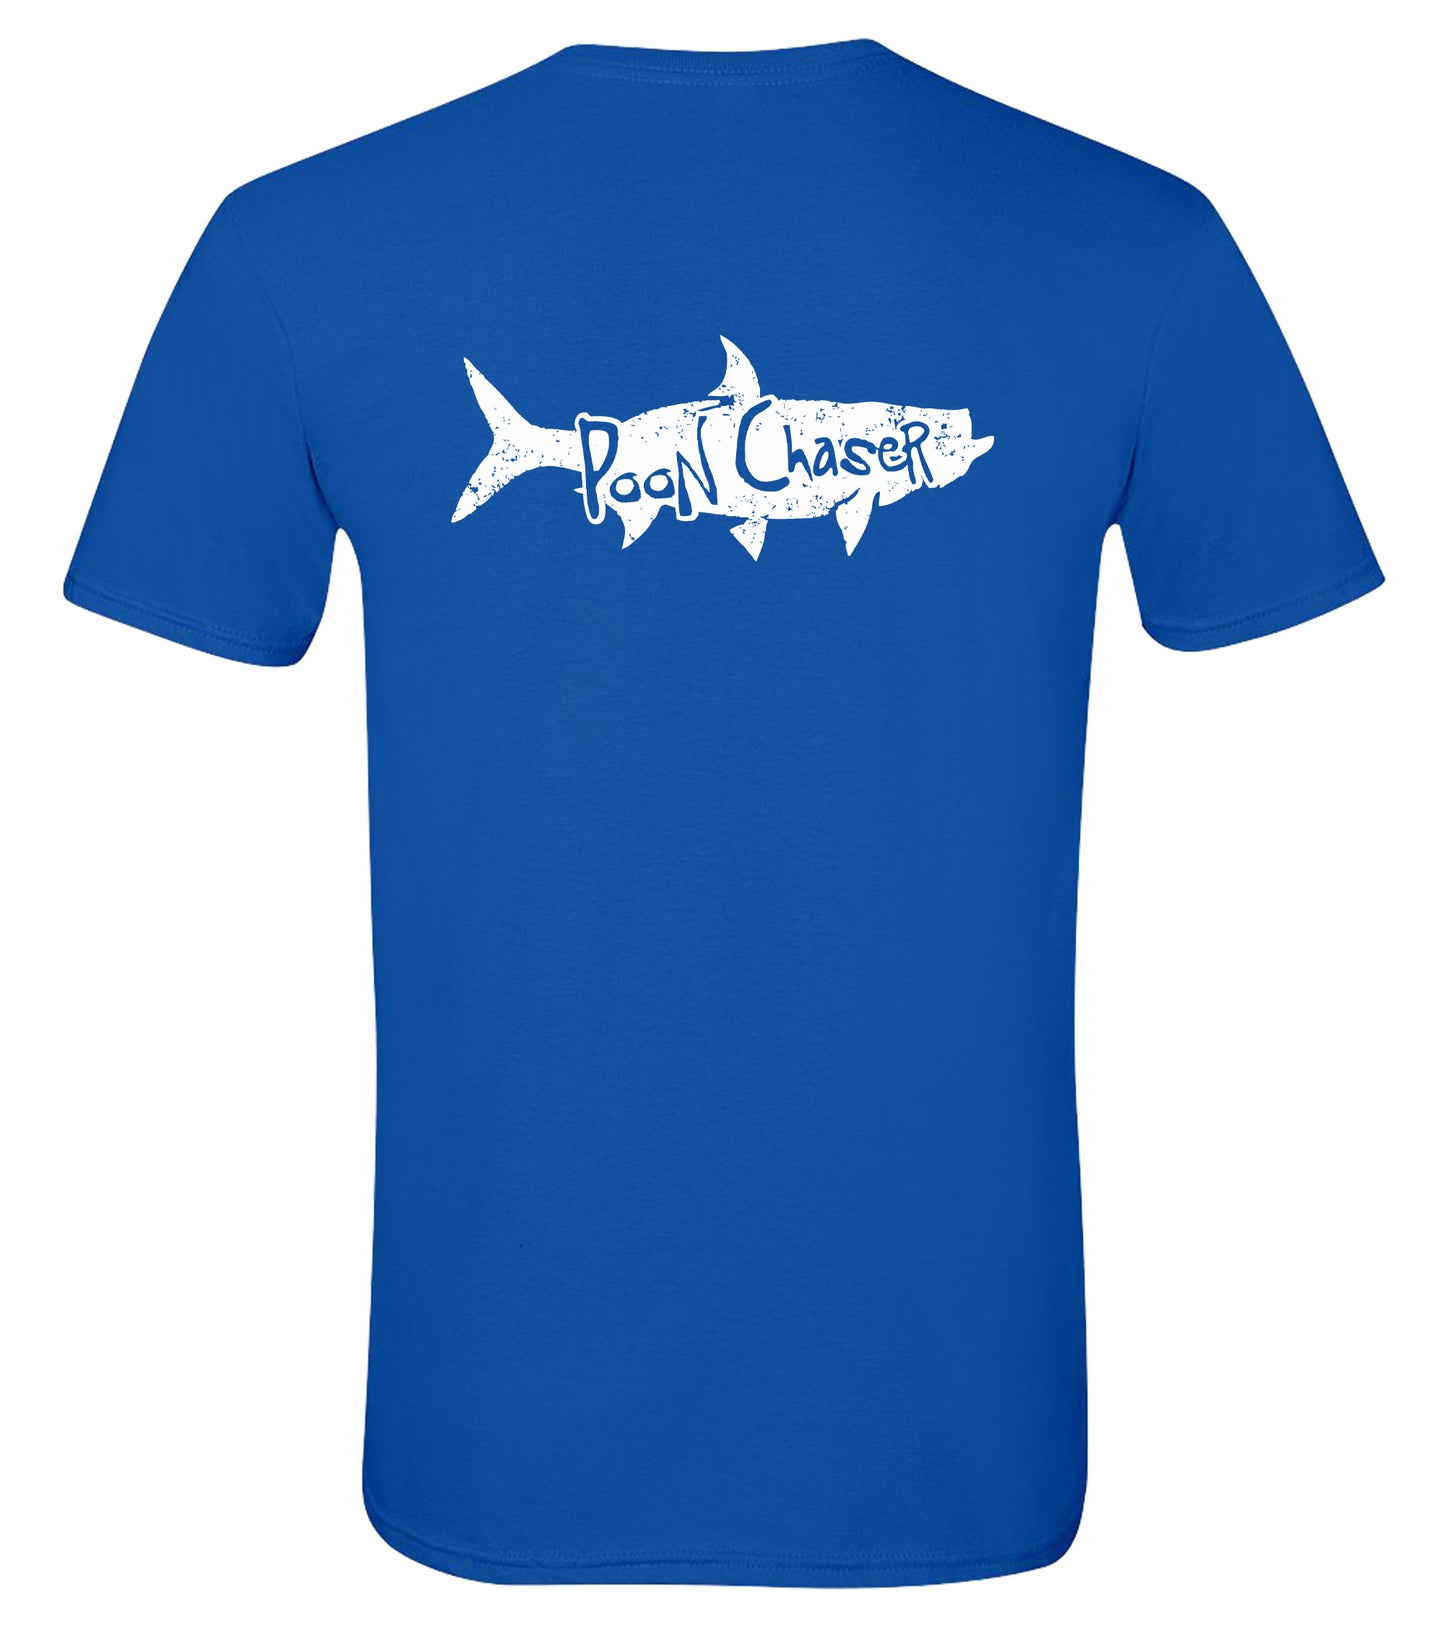 Tarpon "Poon Chaser" Reel Fishy t-shirt - Royal w/White logo